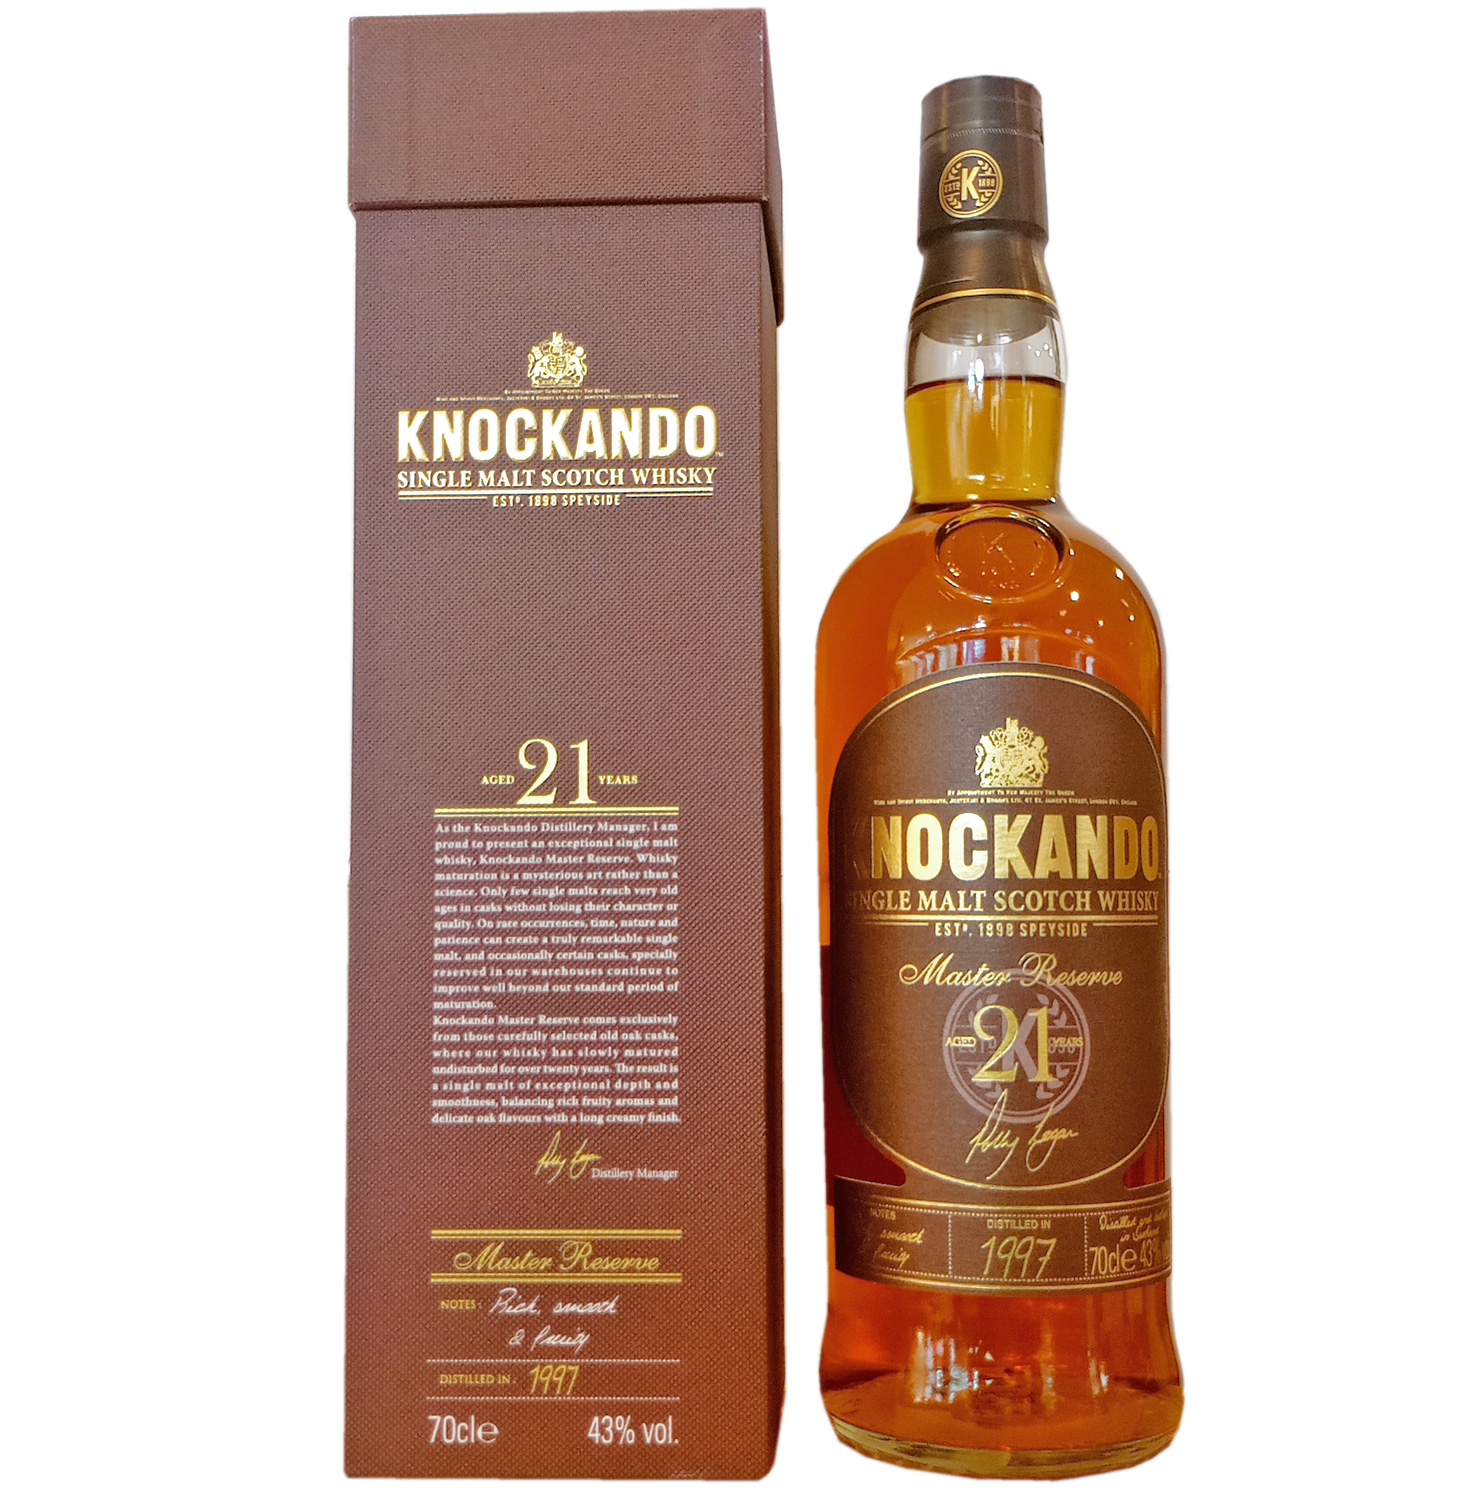 Knockando Speyside Single Malt Scotch Whisky 21